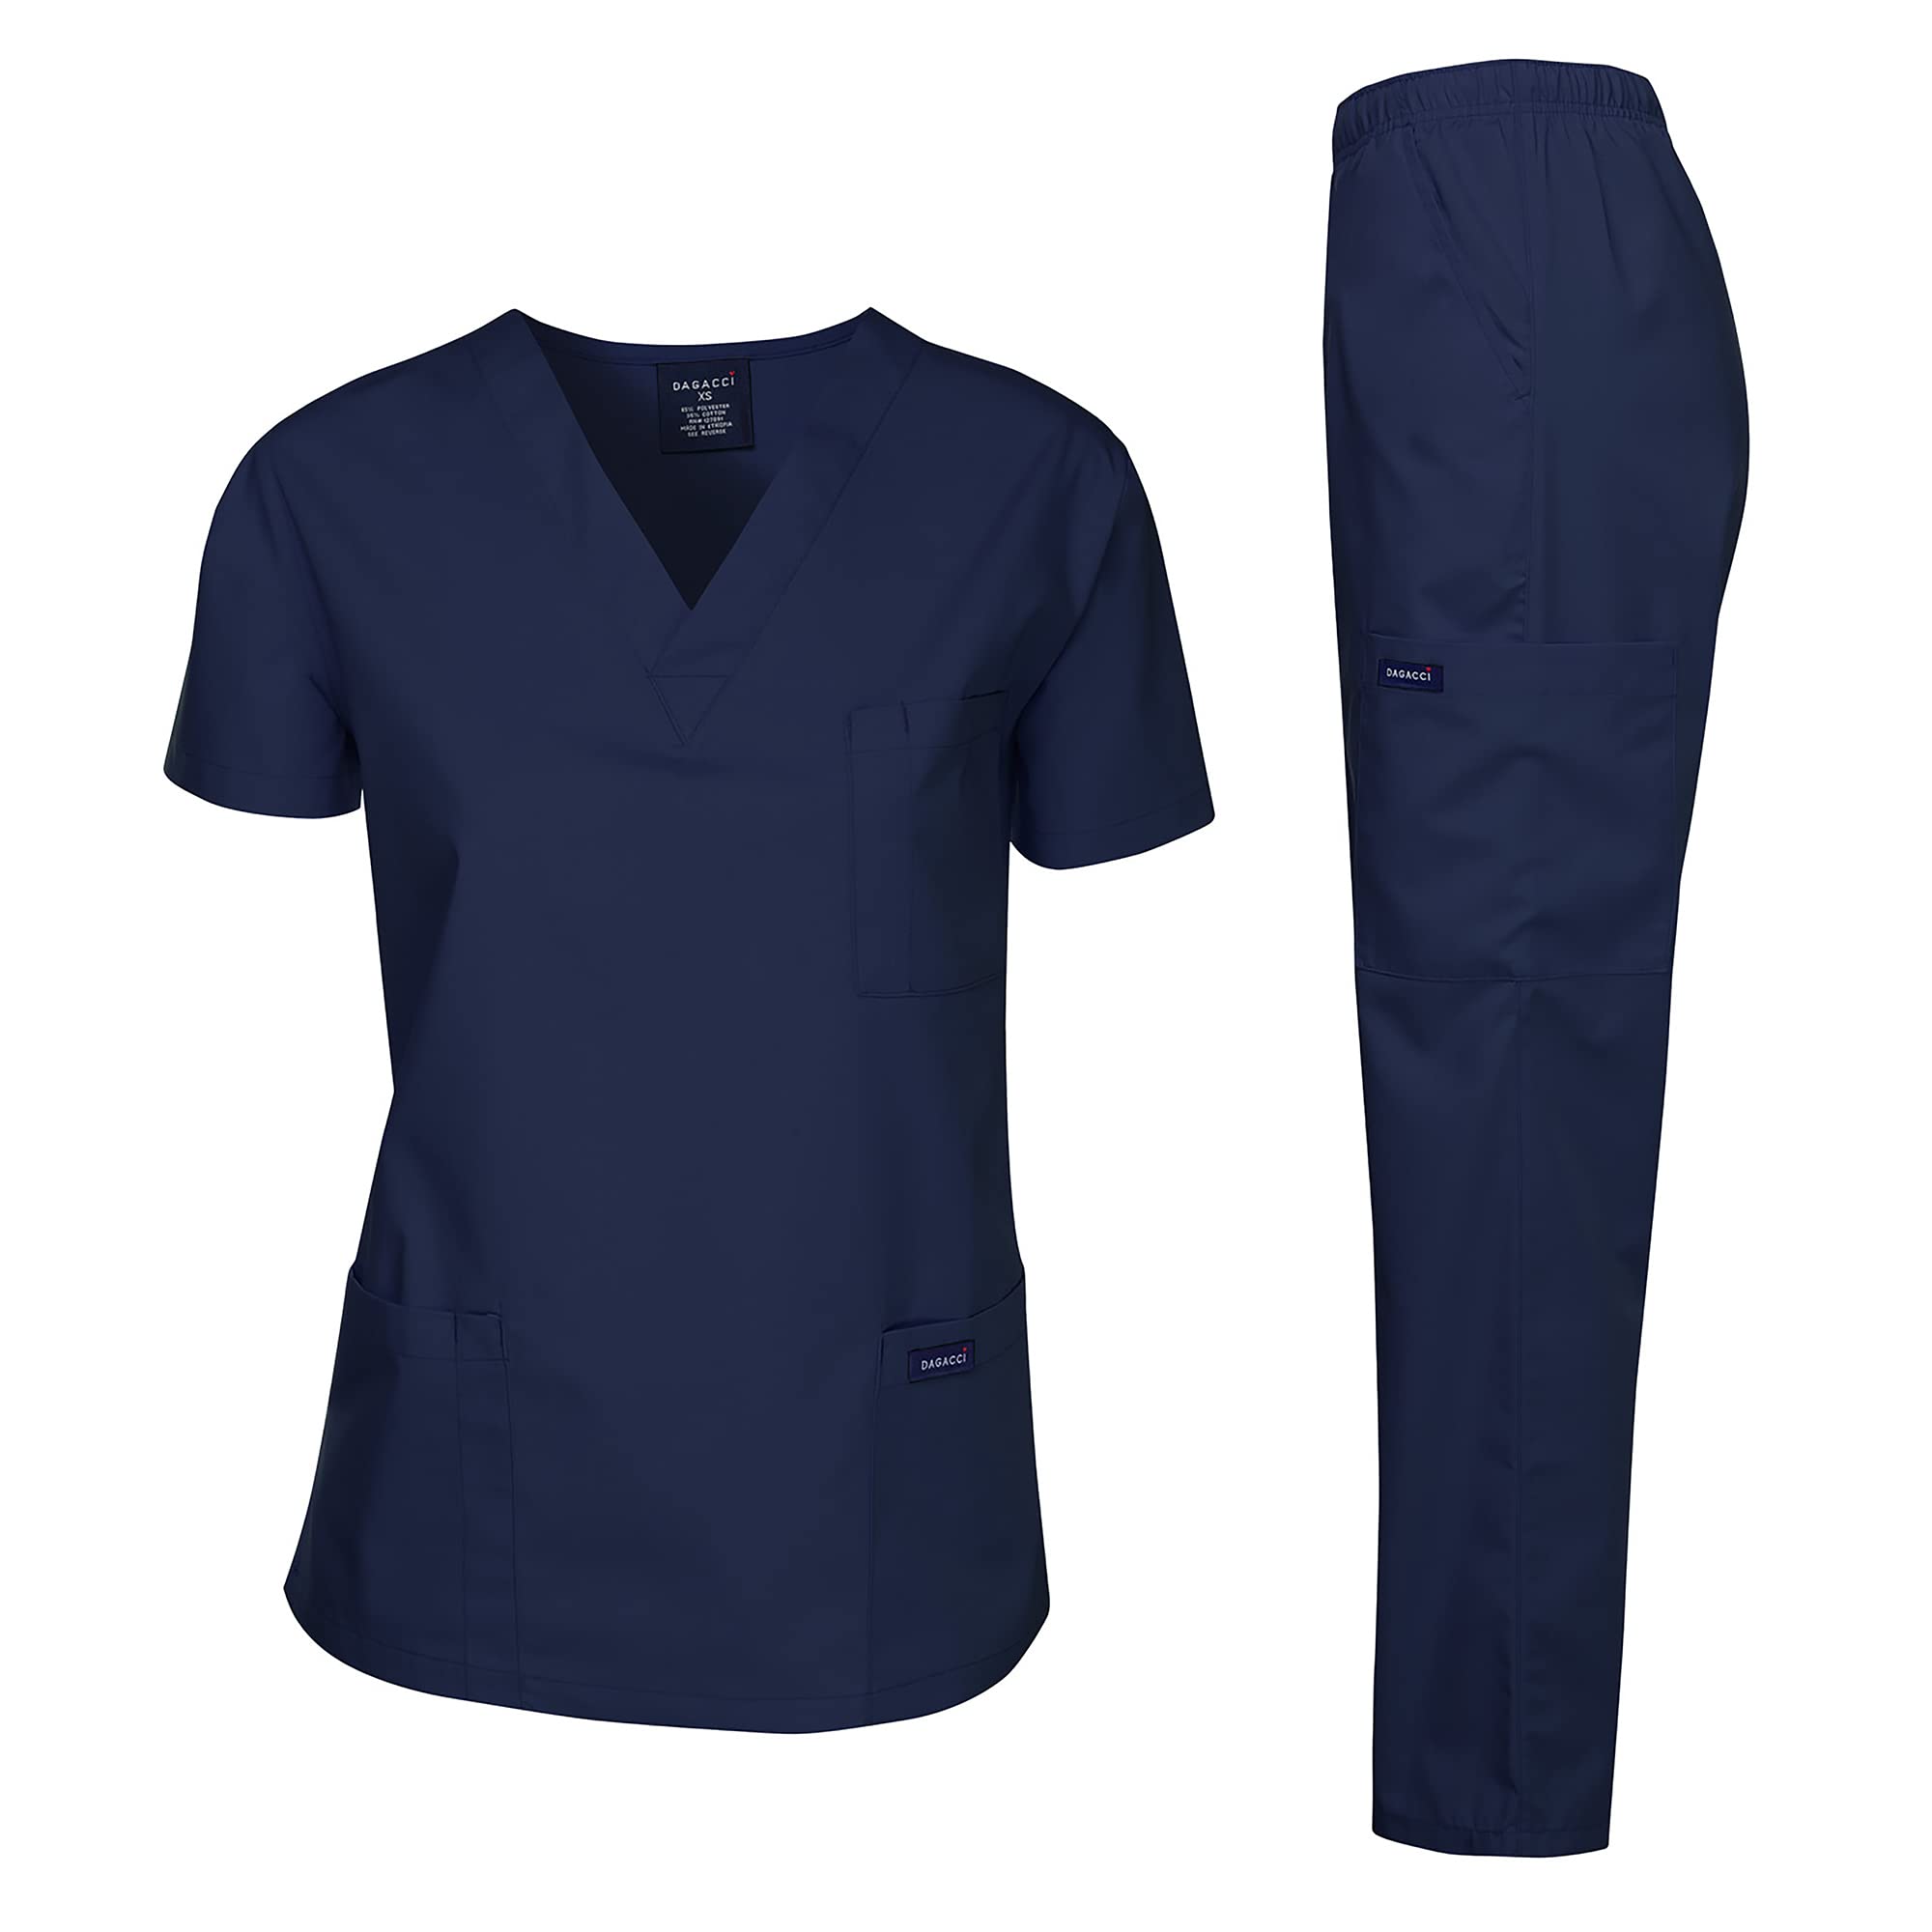 Dagacci Medical Uniform Woman And Man Scrub Set Unisex Medical Scrub Top And Pant, Navy, Xxl